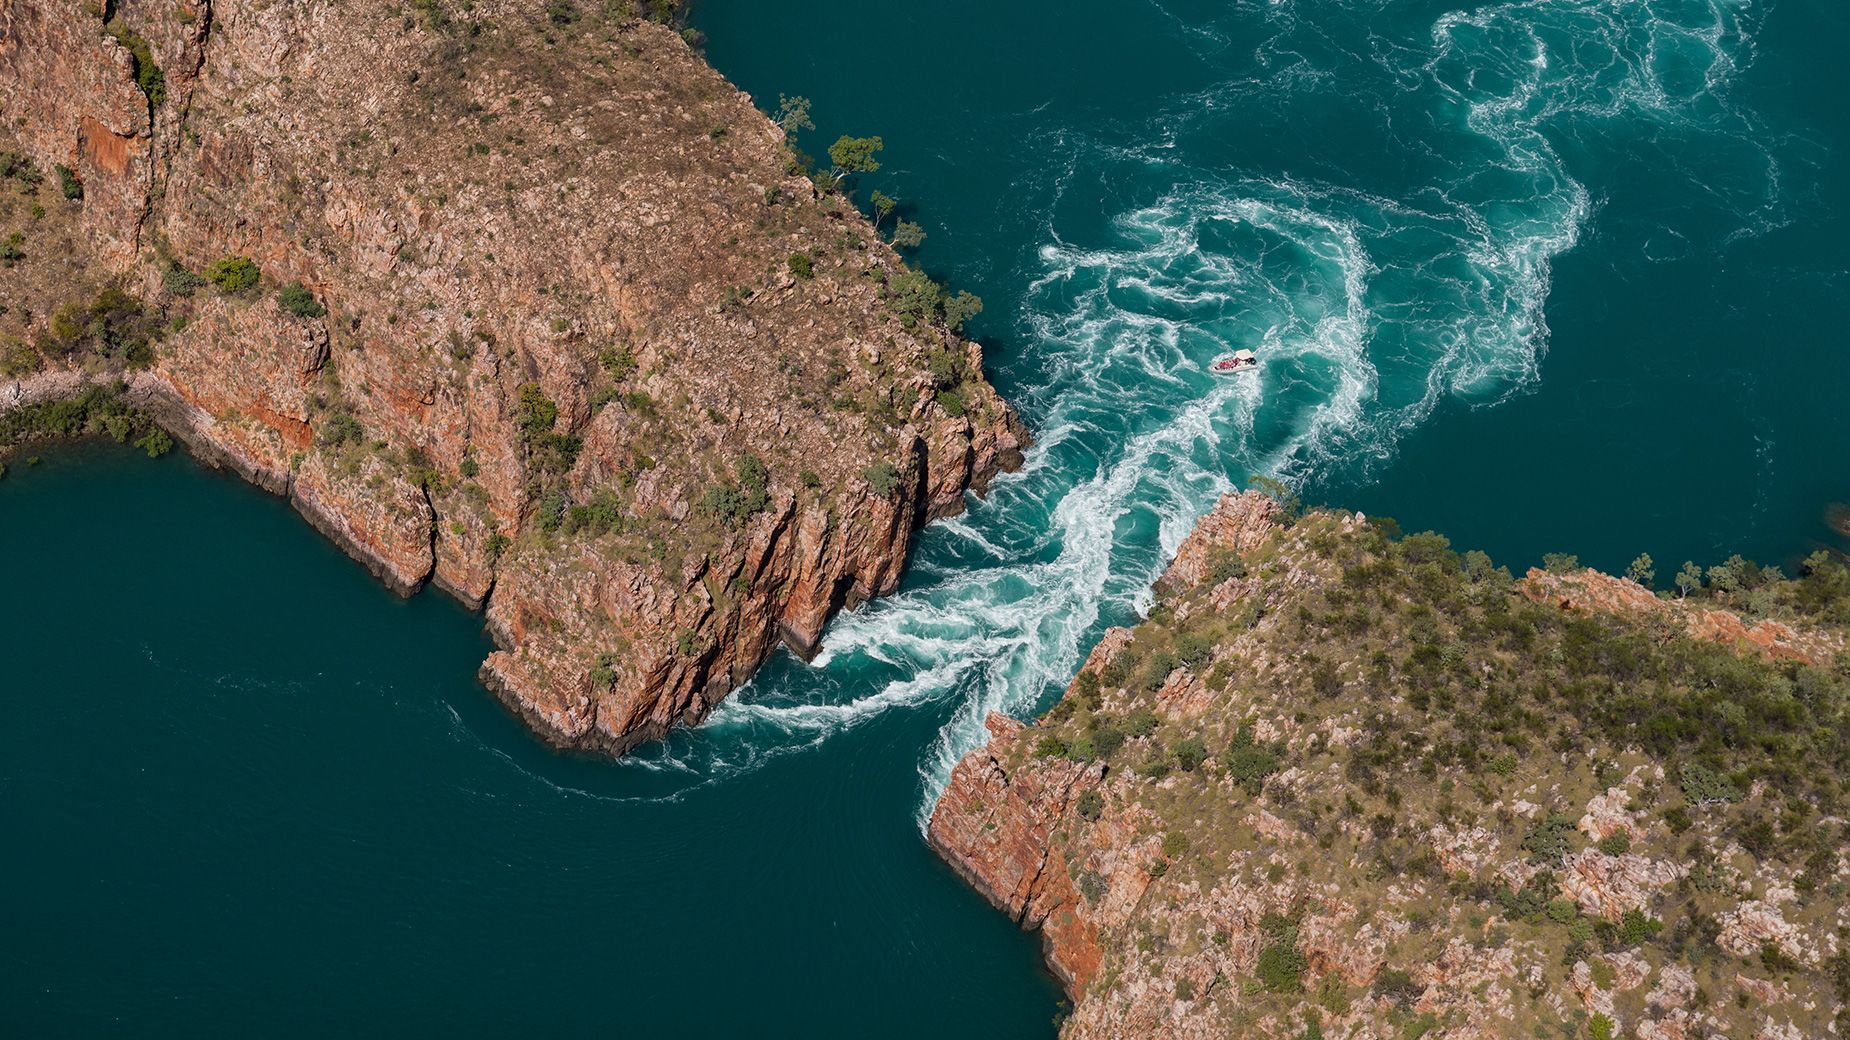 British naturalist David Attenborough has called the Horizontal Falls “Australia’s most unusual natural attraction.”